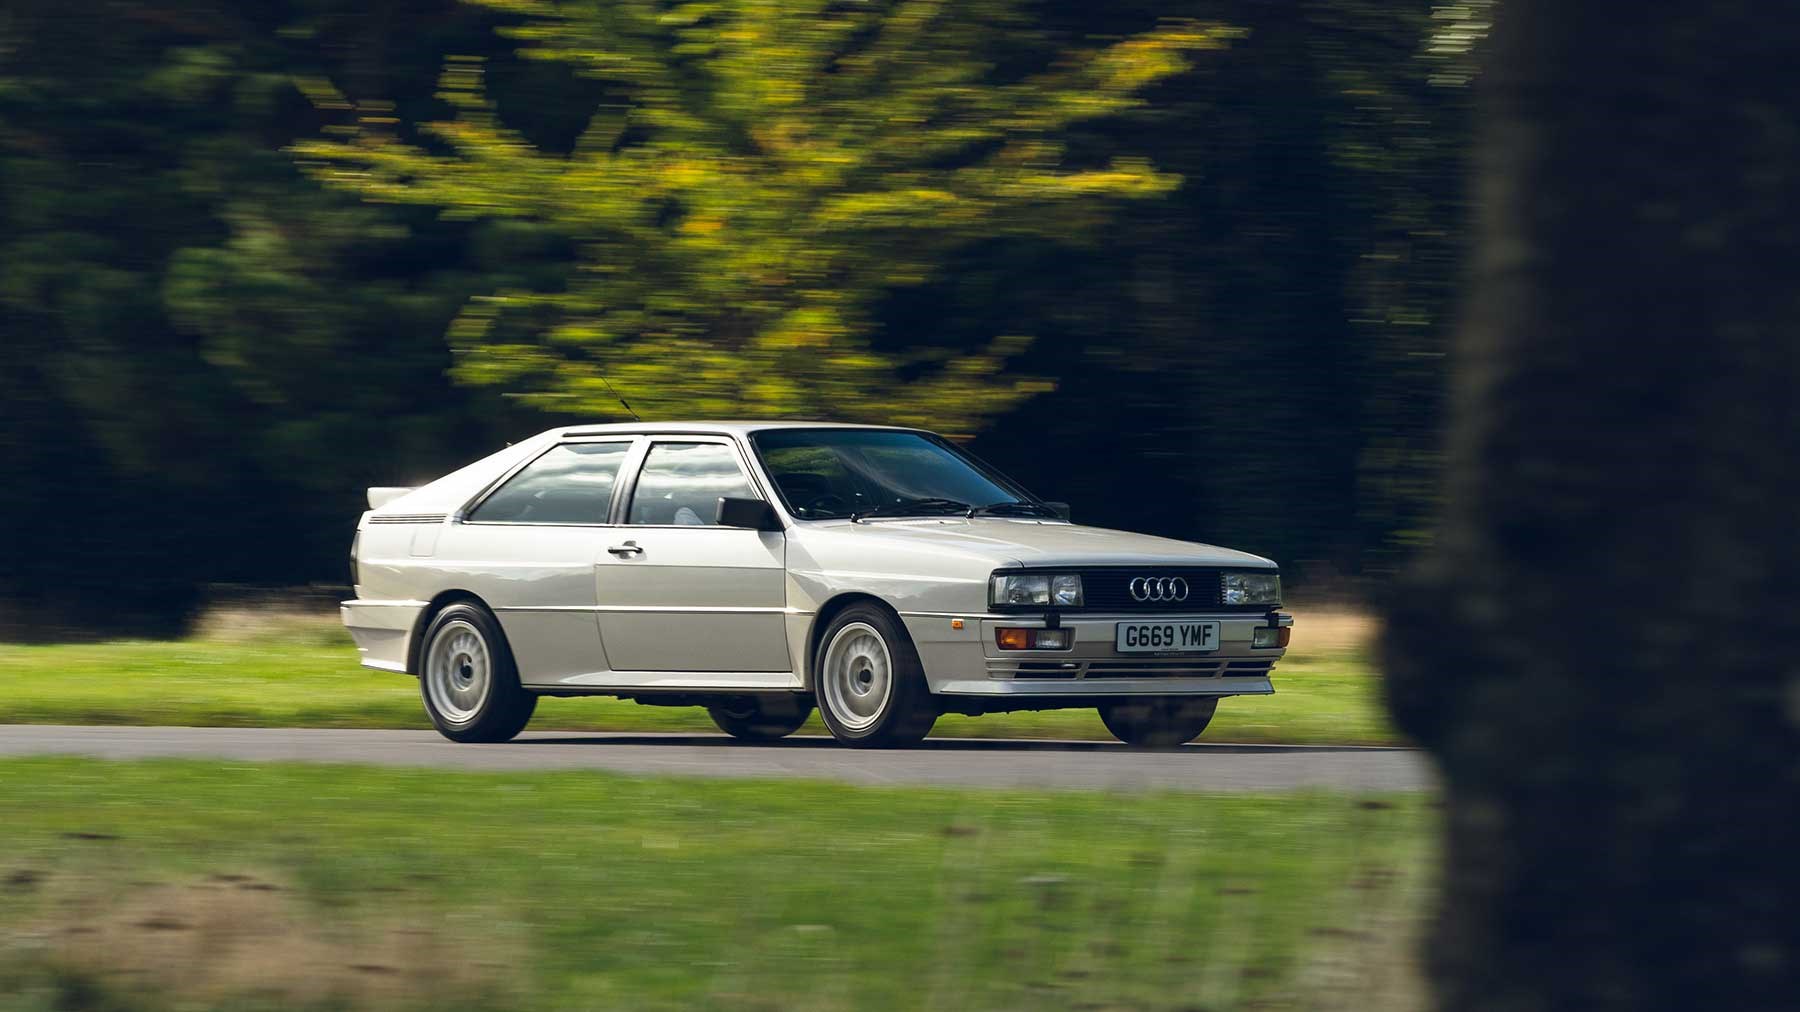 Driving the classics: CAR magazines road tests the Ur Quattro